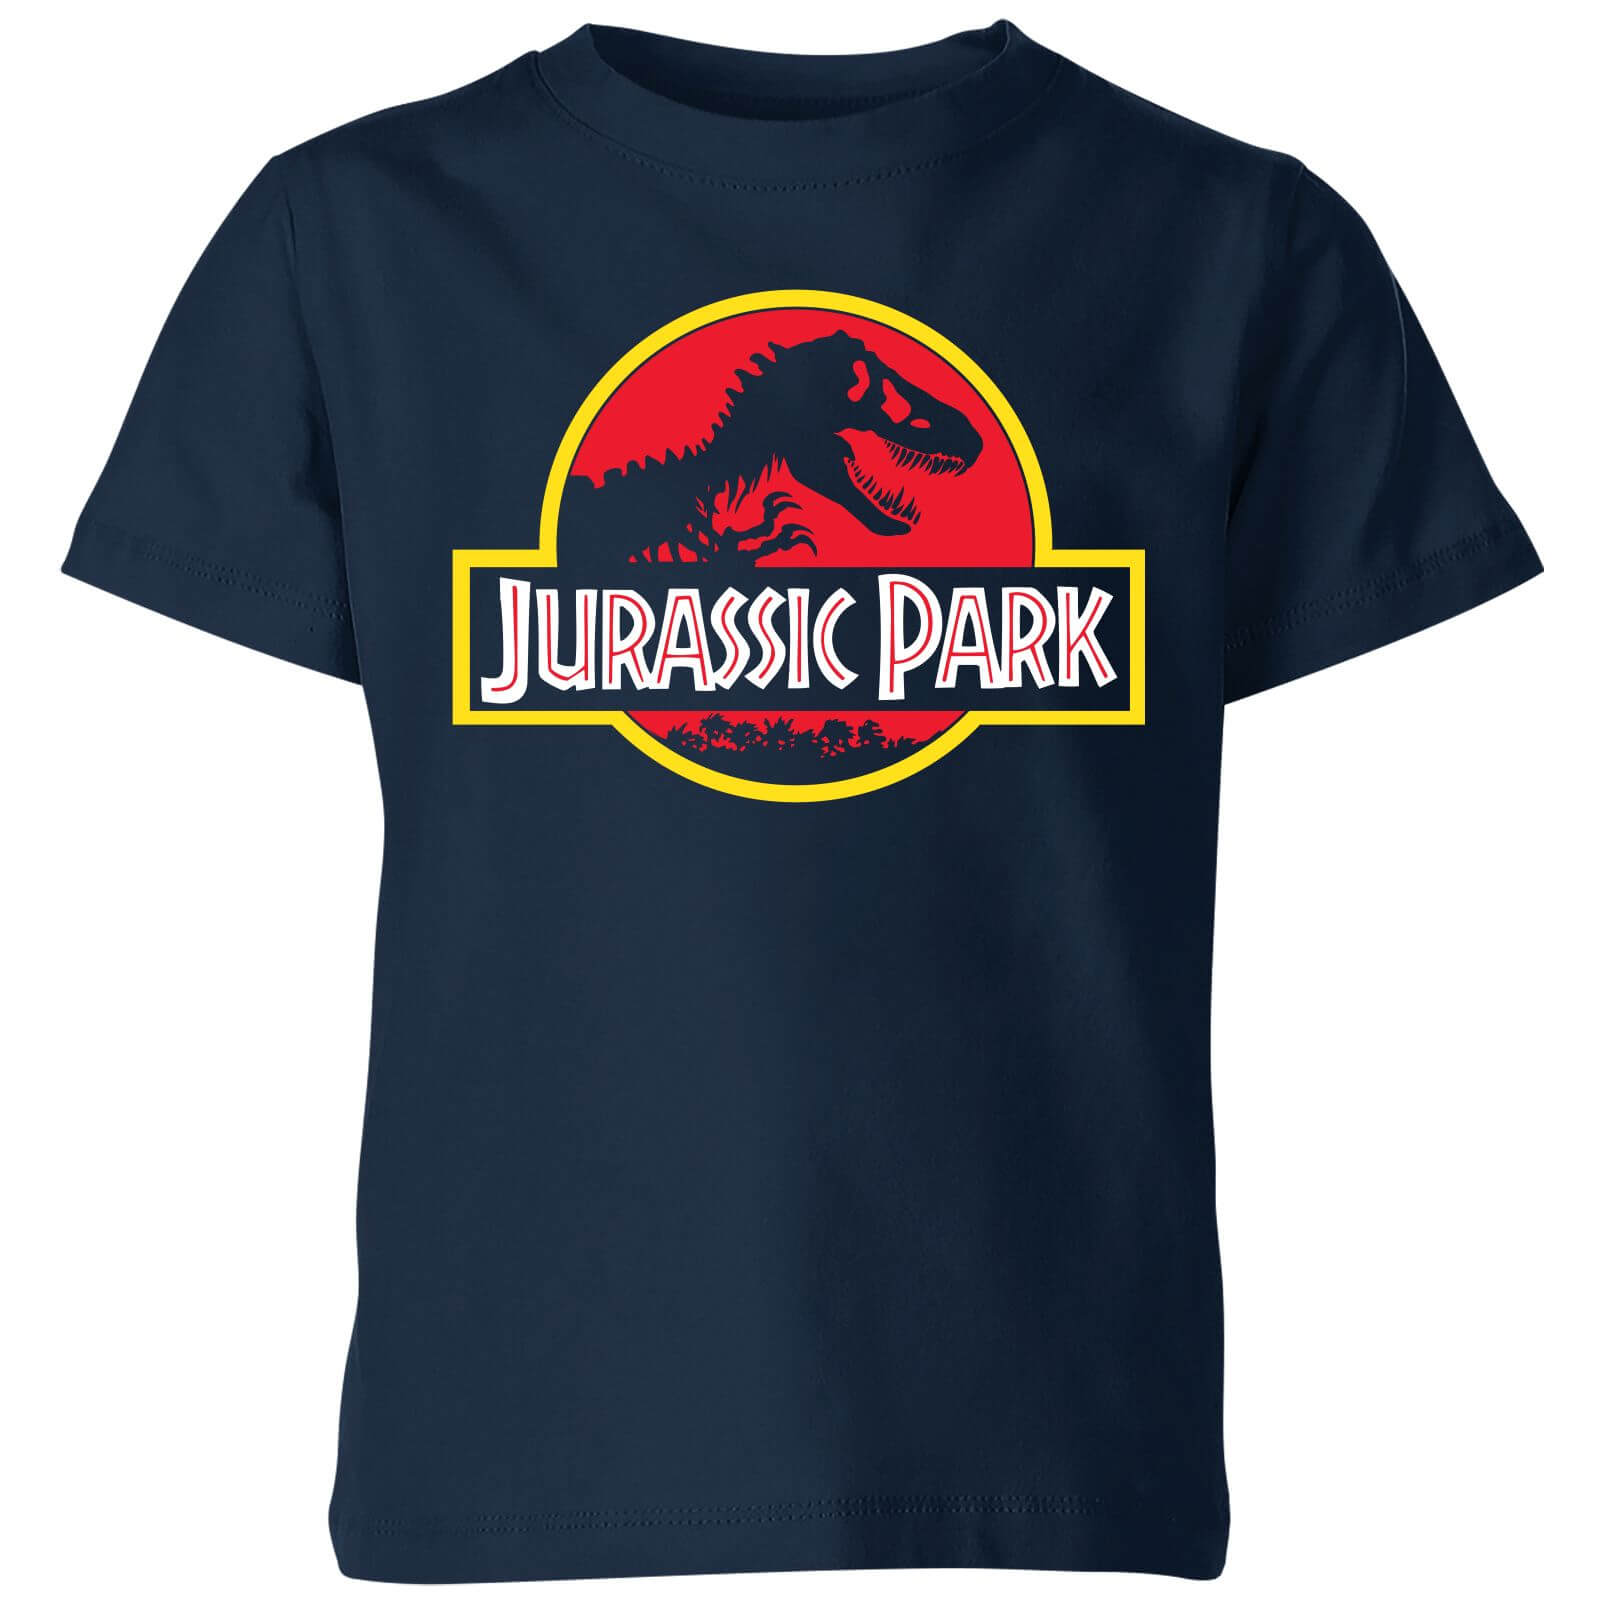 Jurassic Park Logo Kids' T-Shirt - Navy - 9-10 Years - Navy